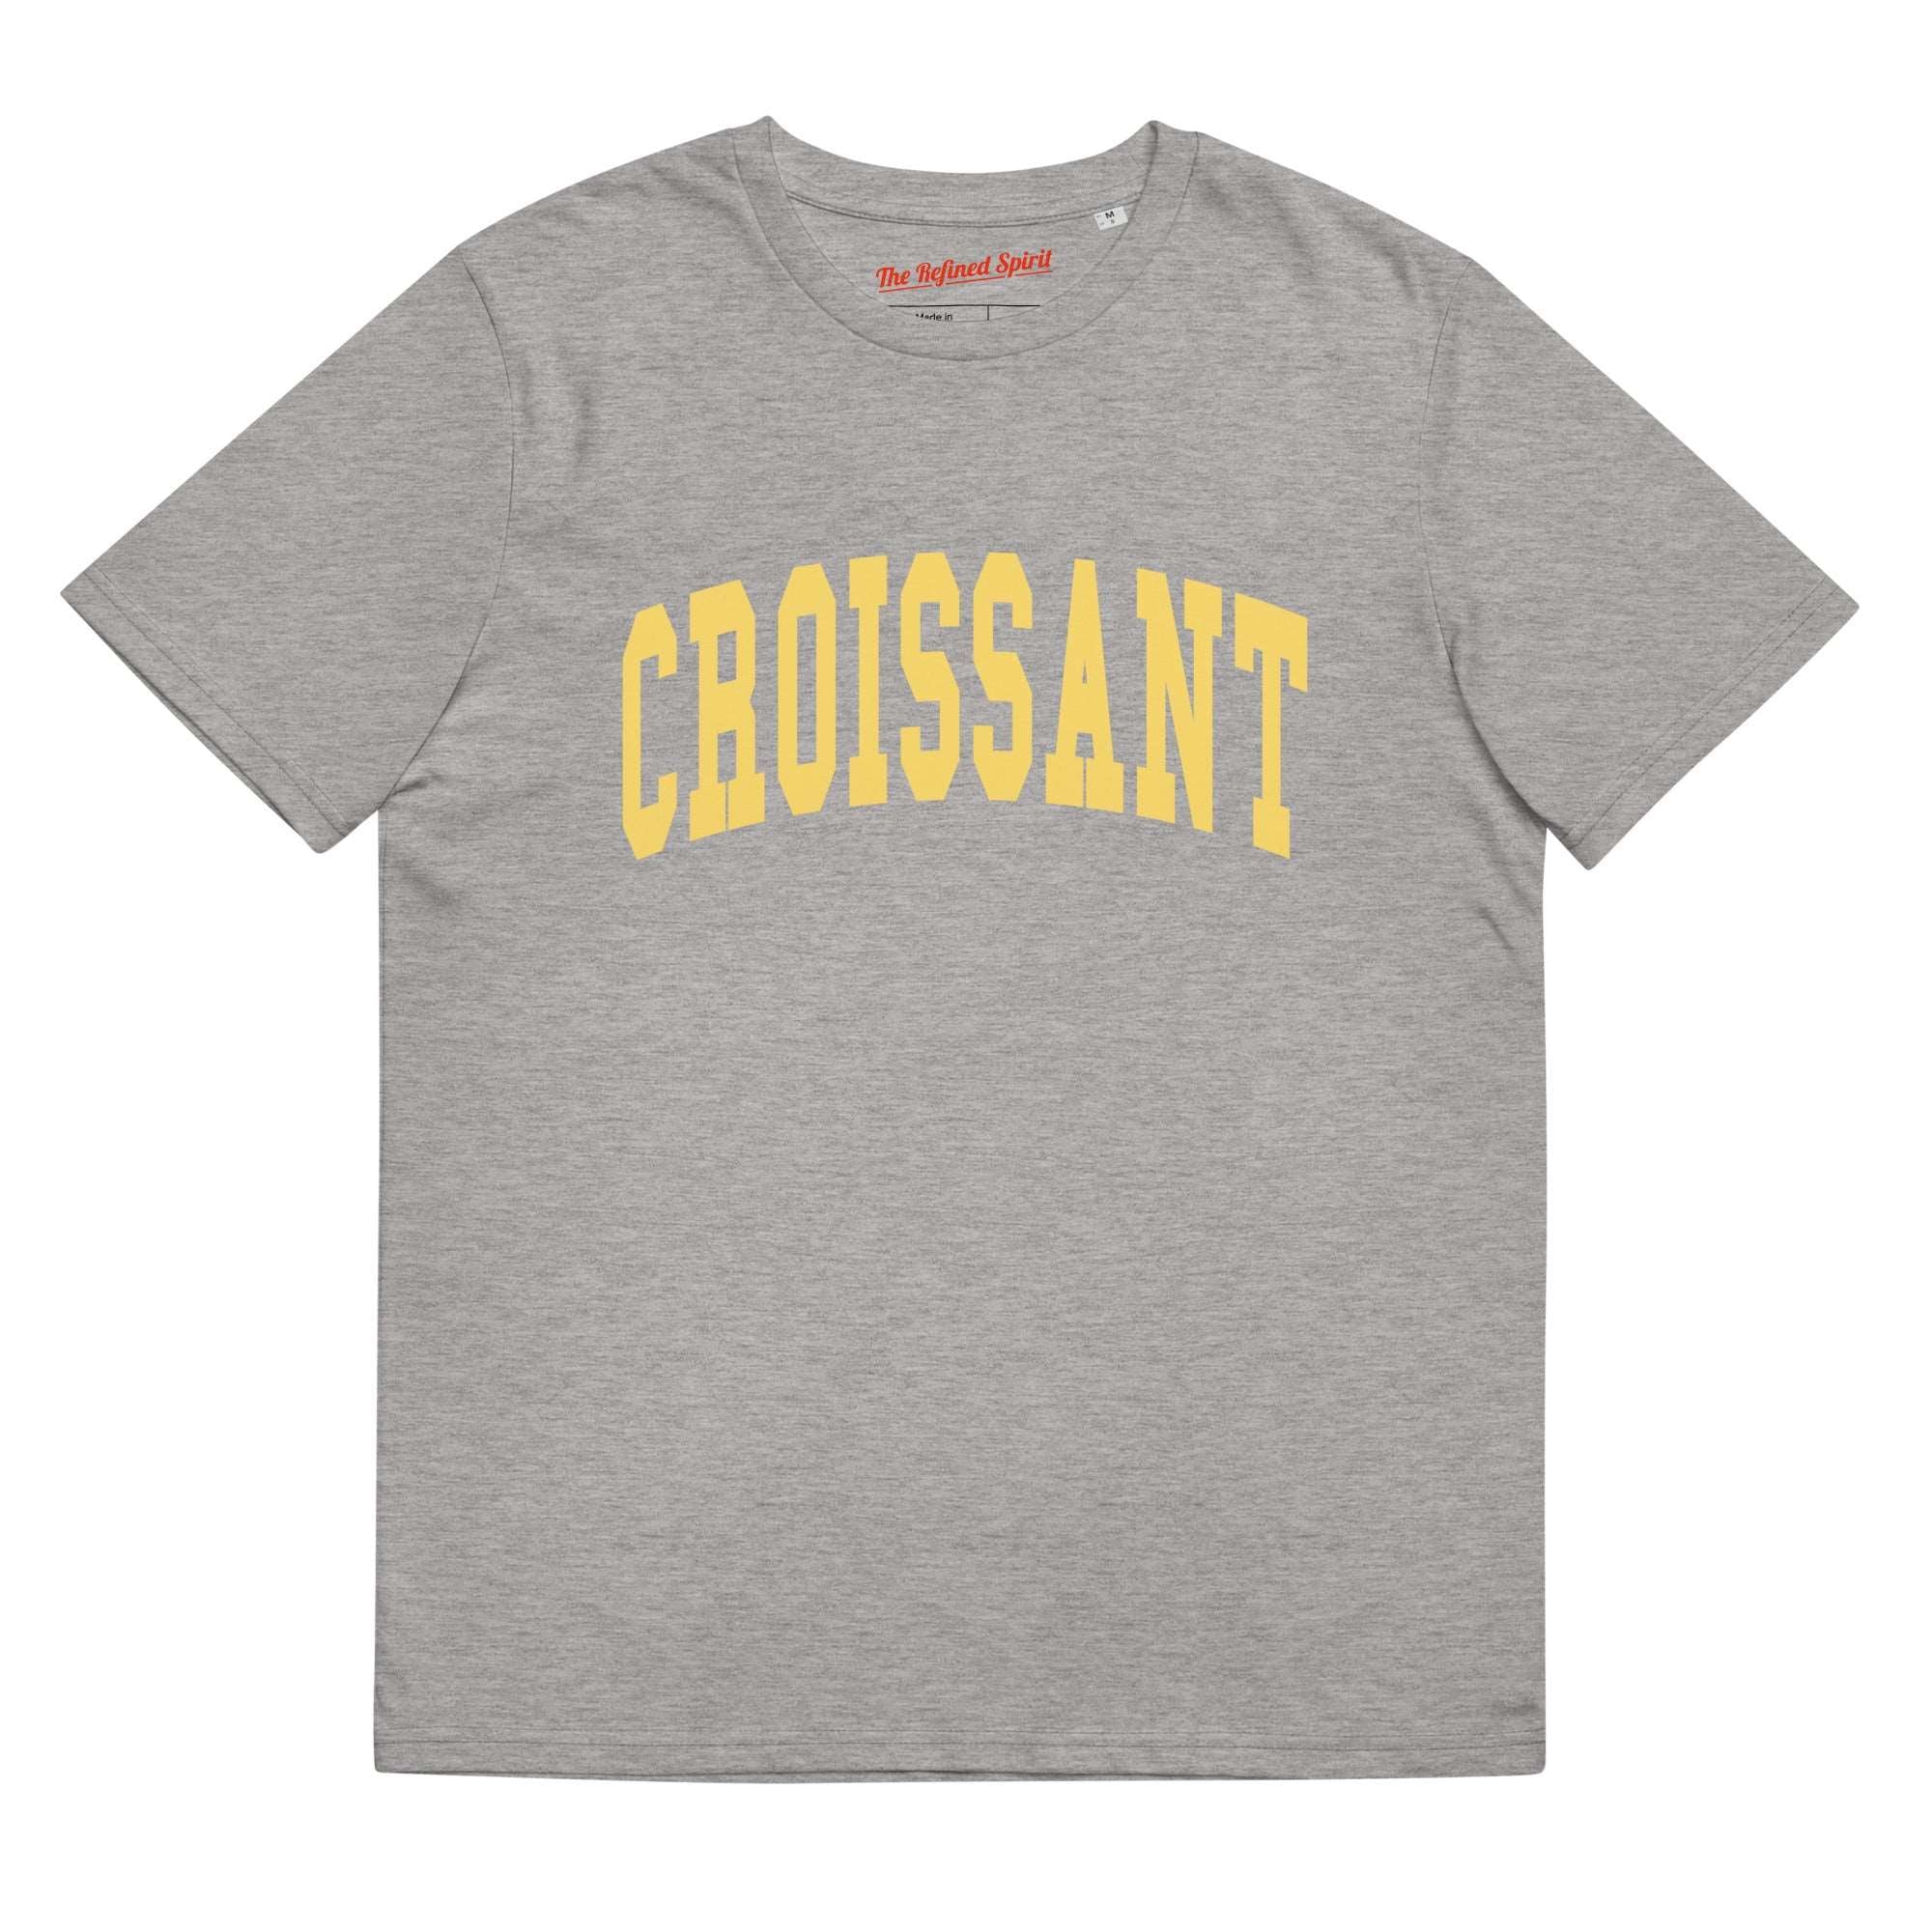 Croissant - Organic T-shirt